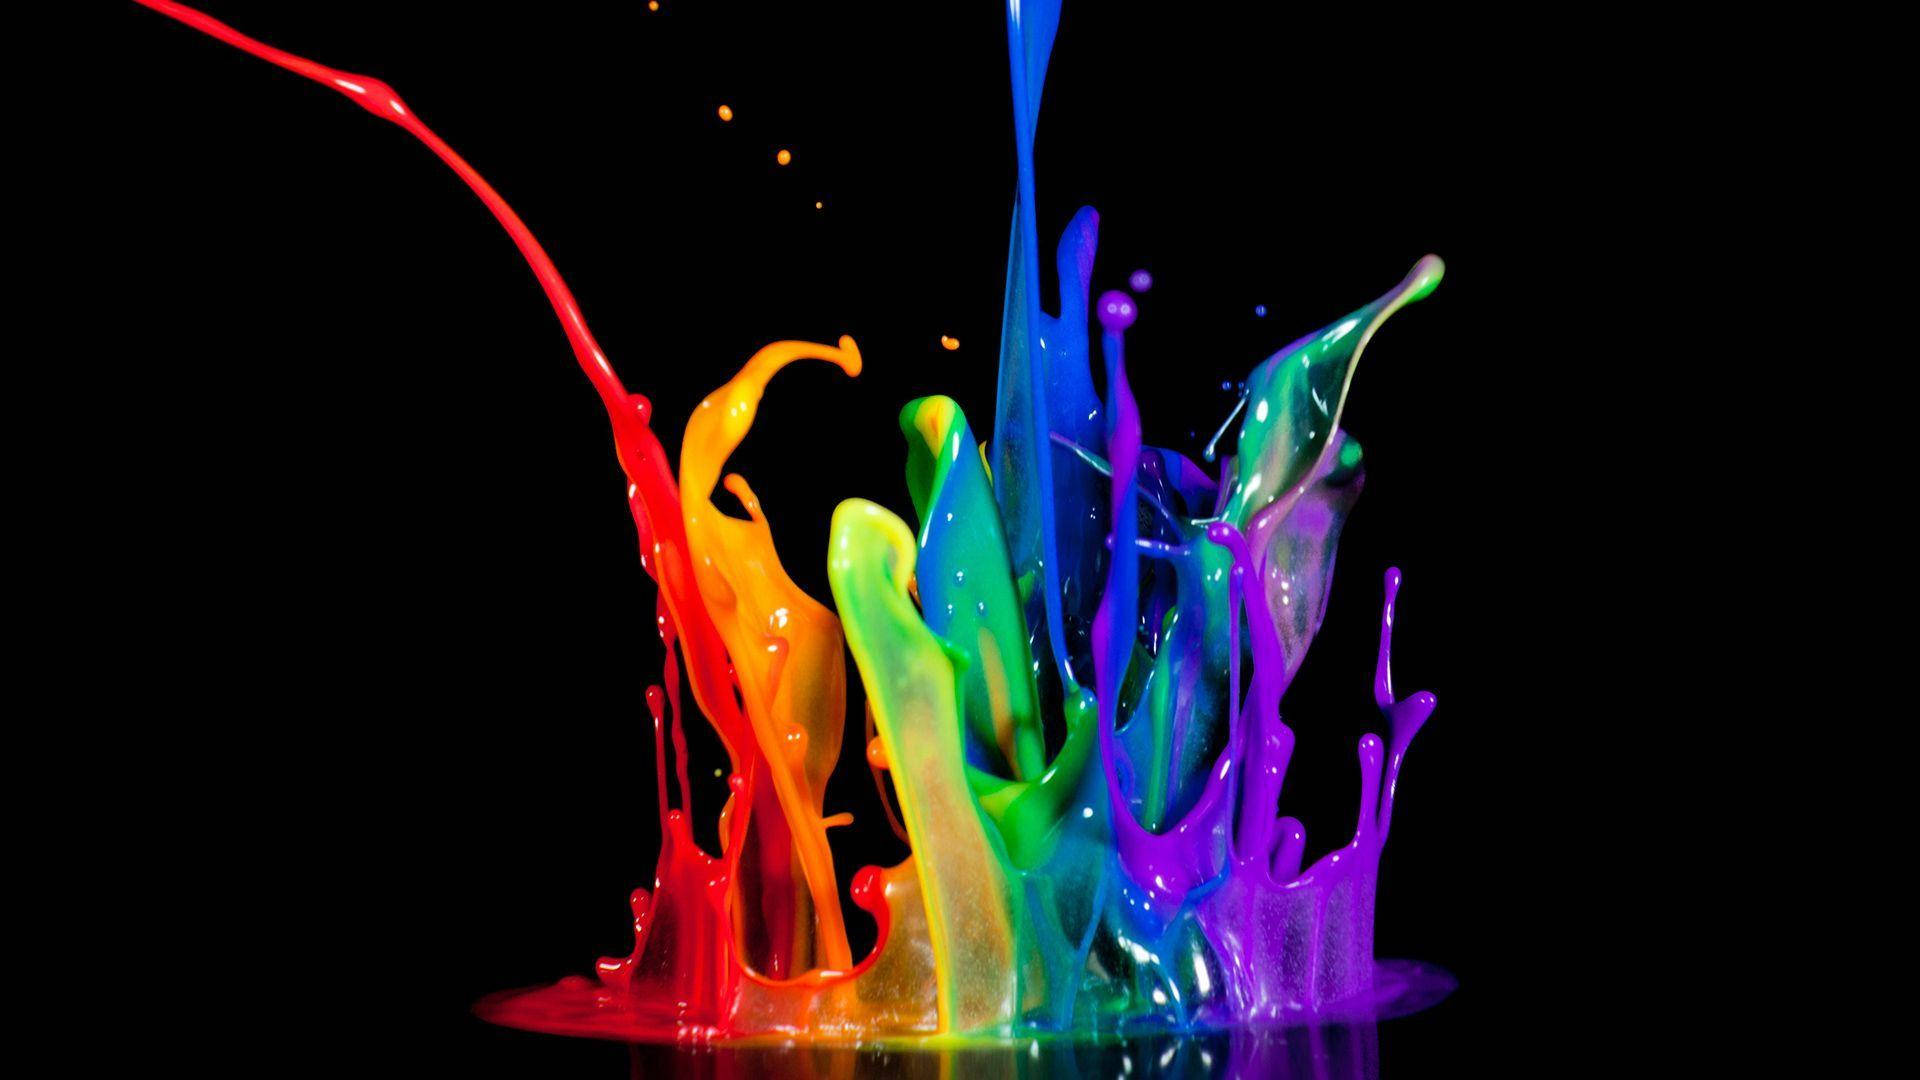 A colorful array of paint splatter evokes feelings of aesthetic beauty. Wallpaper